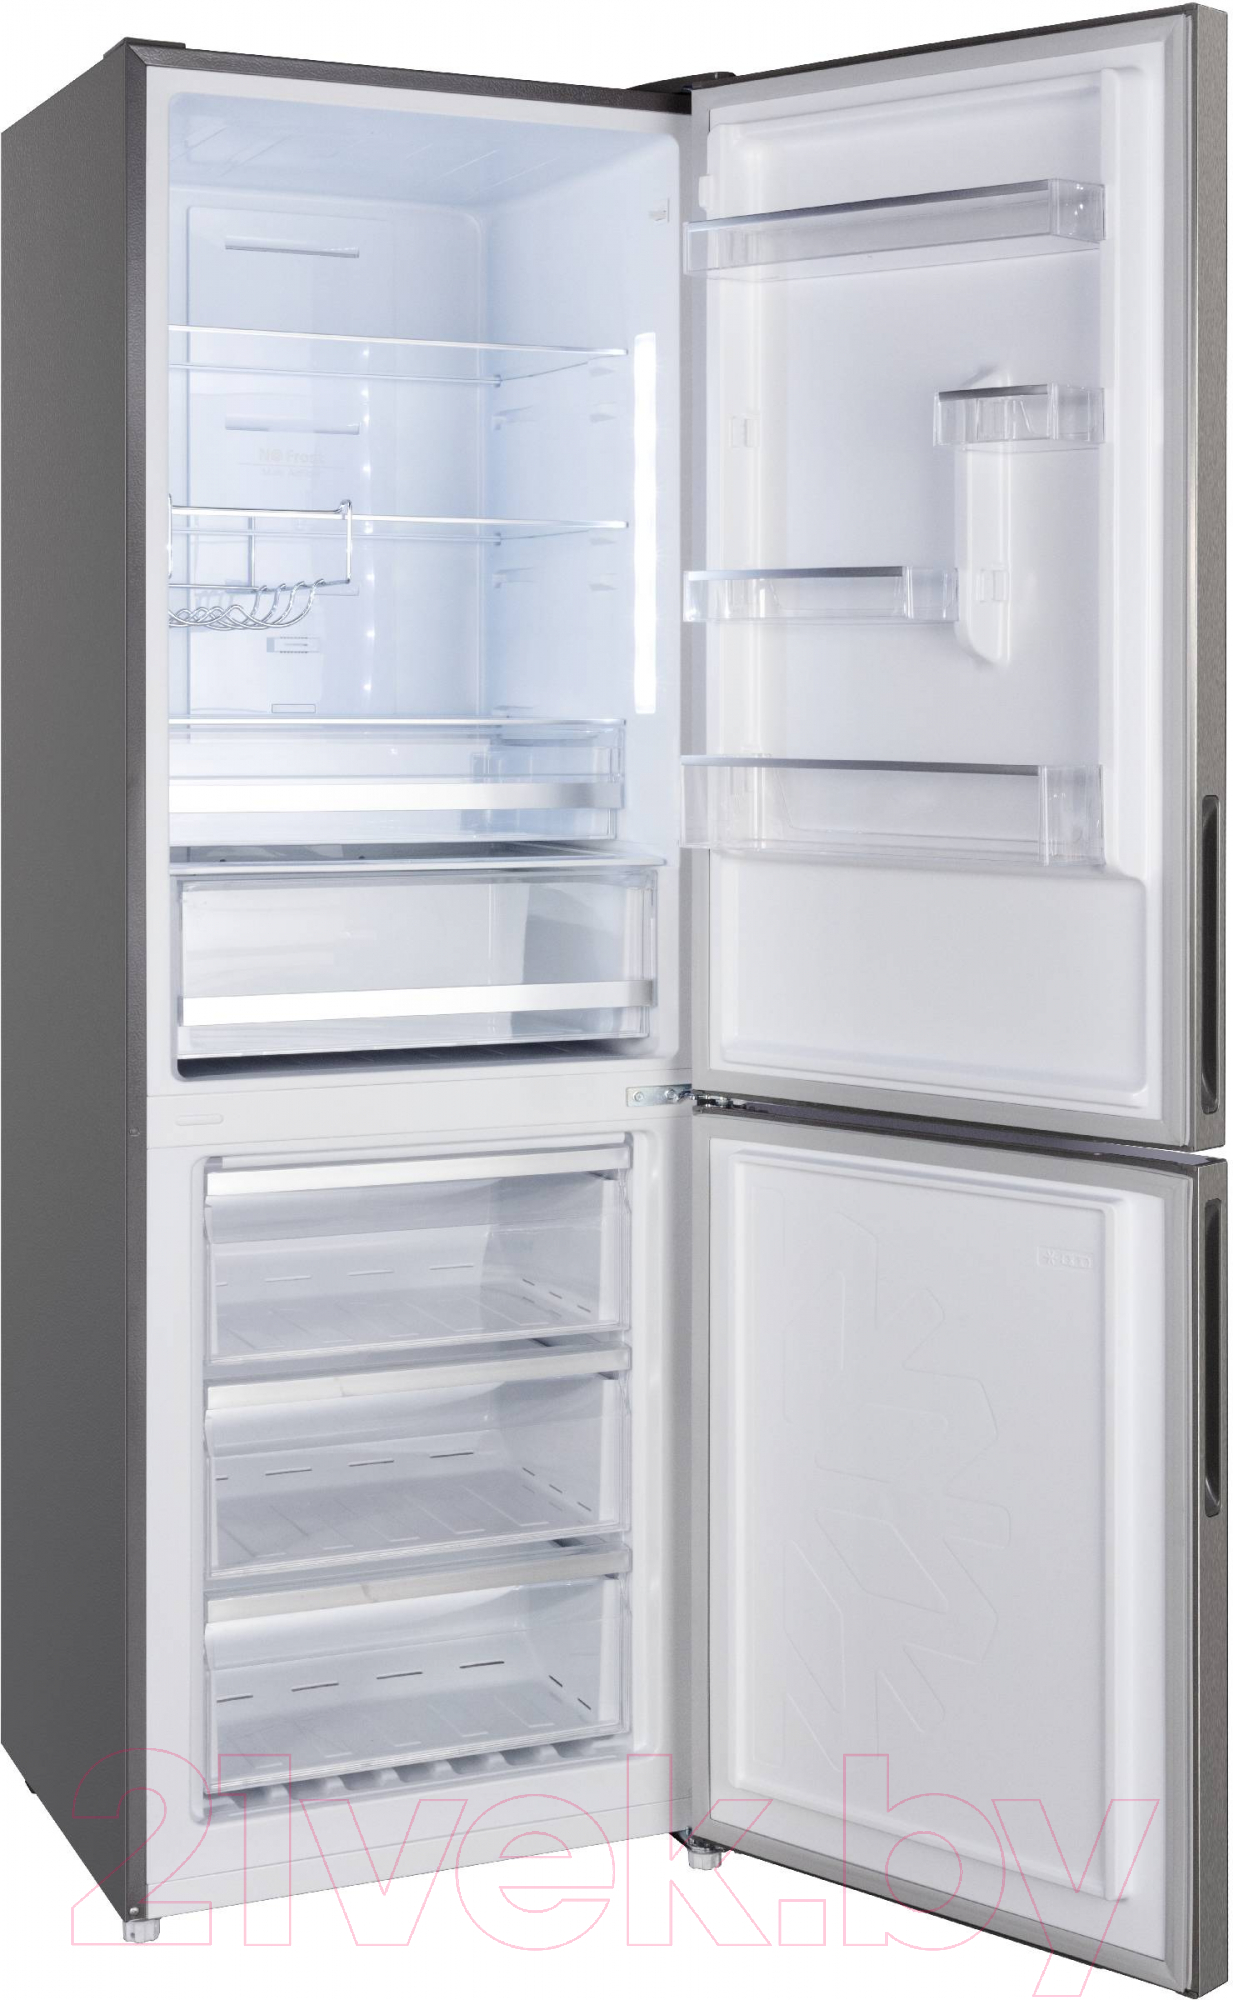 Холодильник с морозильником Korting KNFC 61869 X